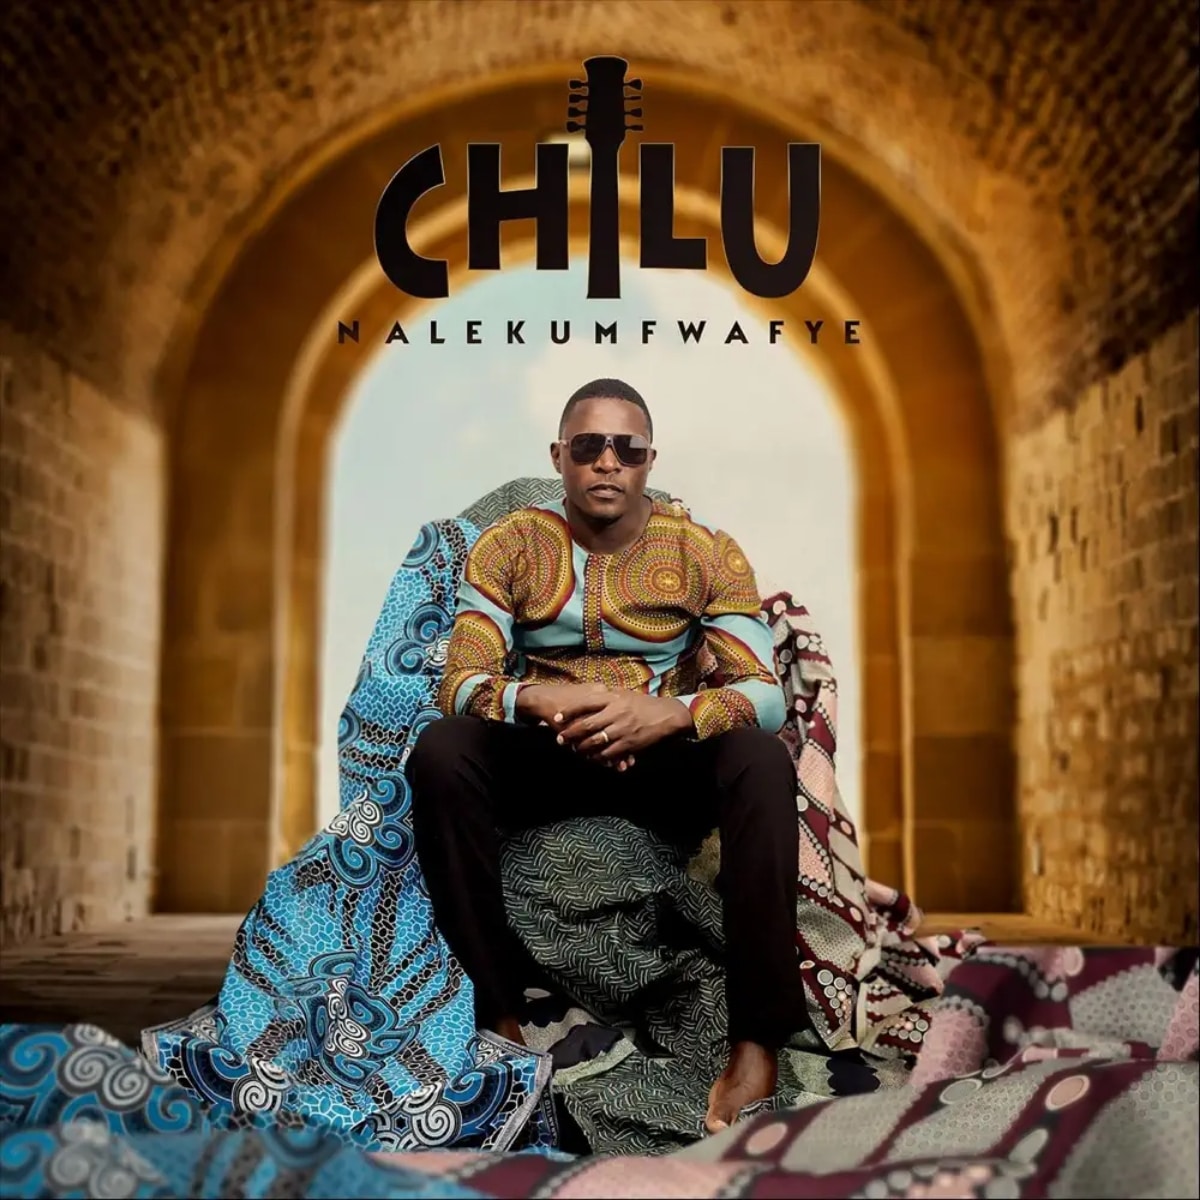 DOWNLOAD ALBUM: Chilu – “Nalekumfwafye” | Full Album